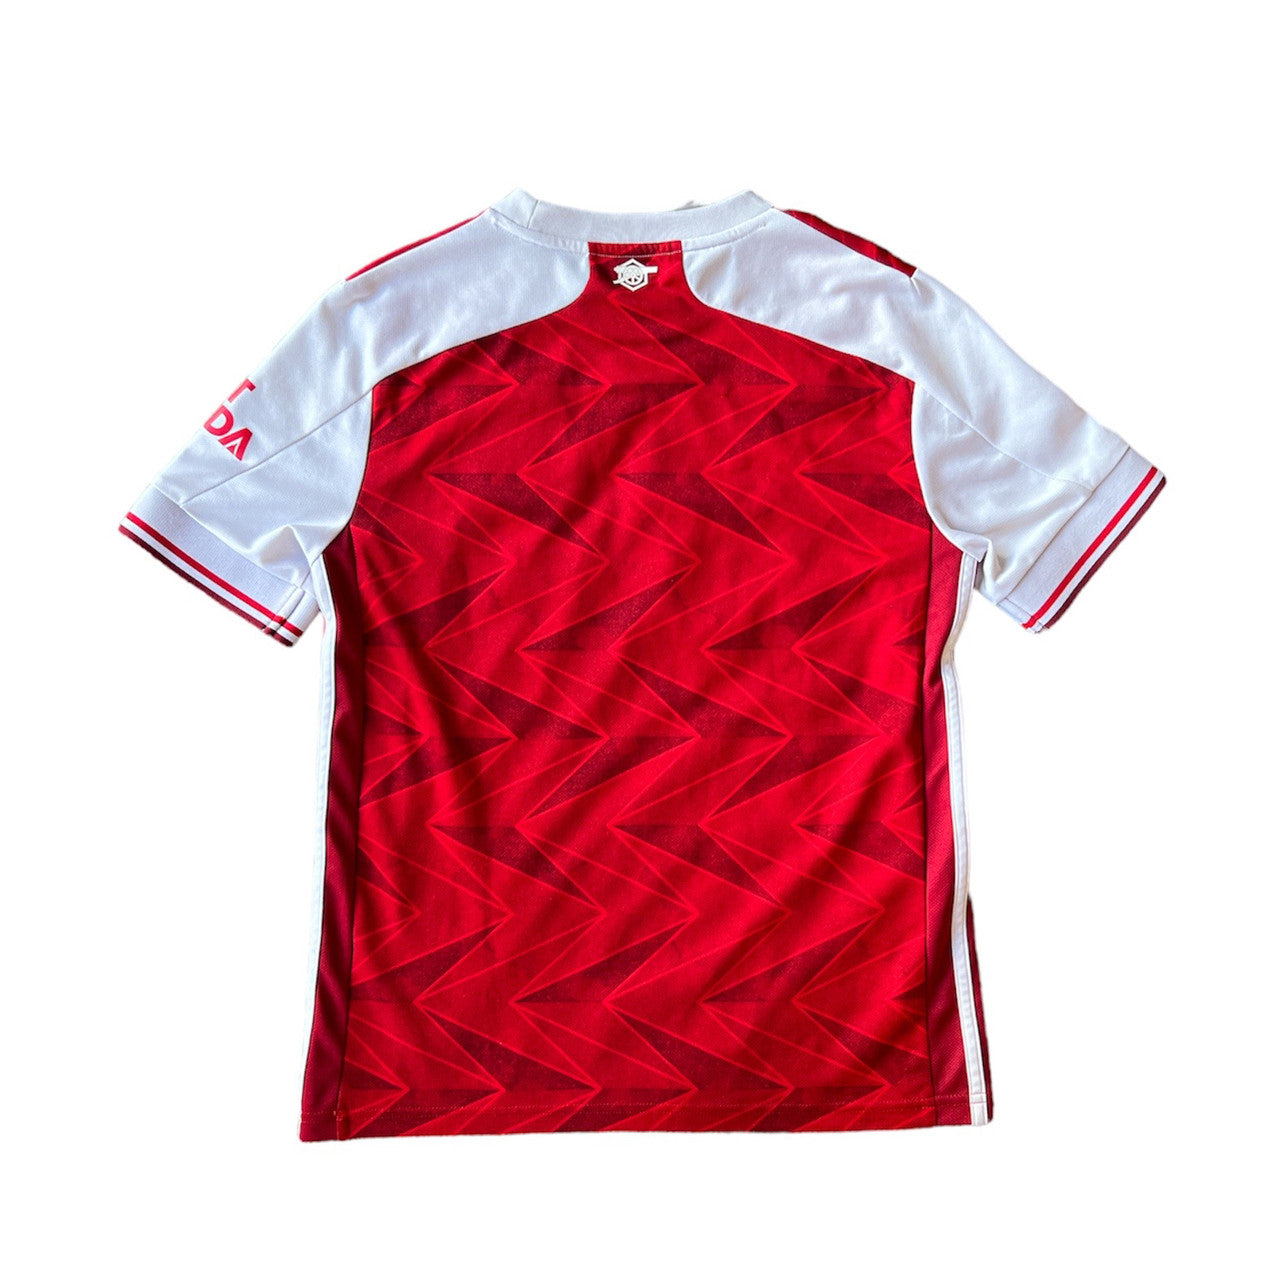 Adidas Arsenal Football Jersey (Youth)